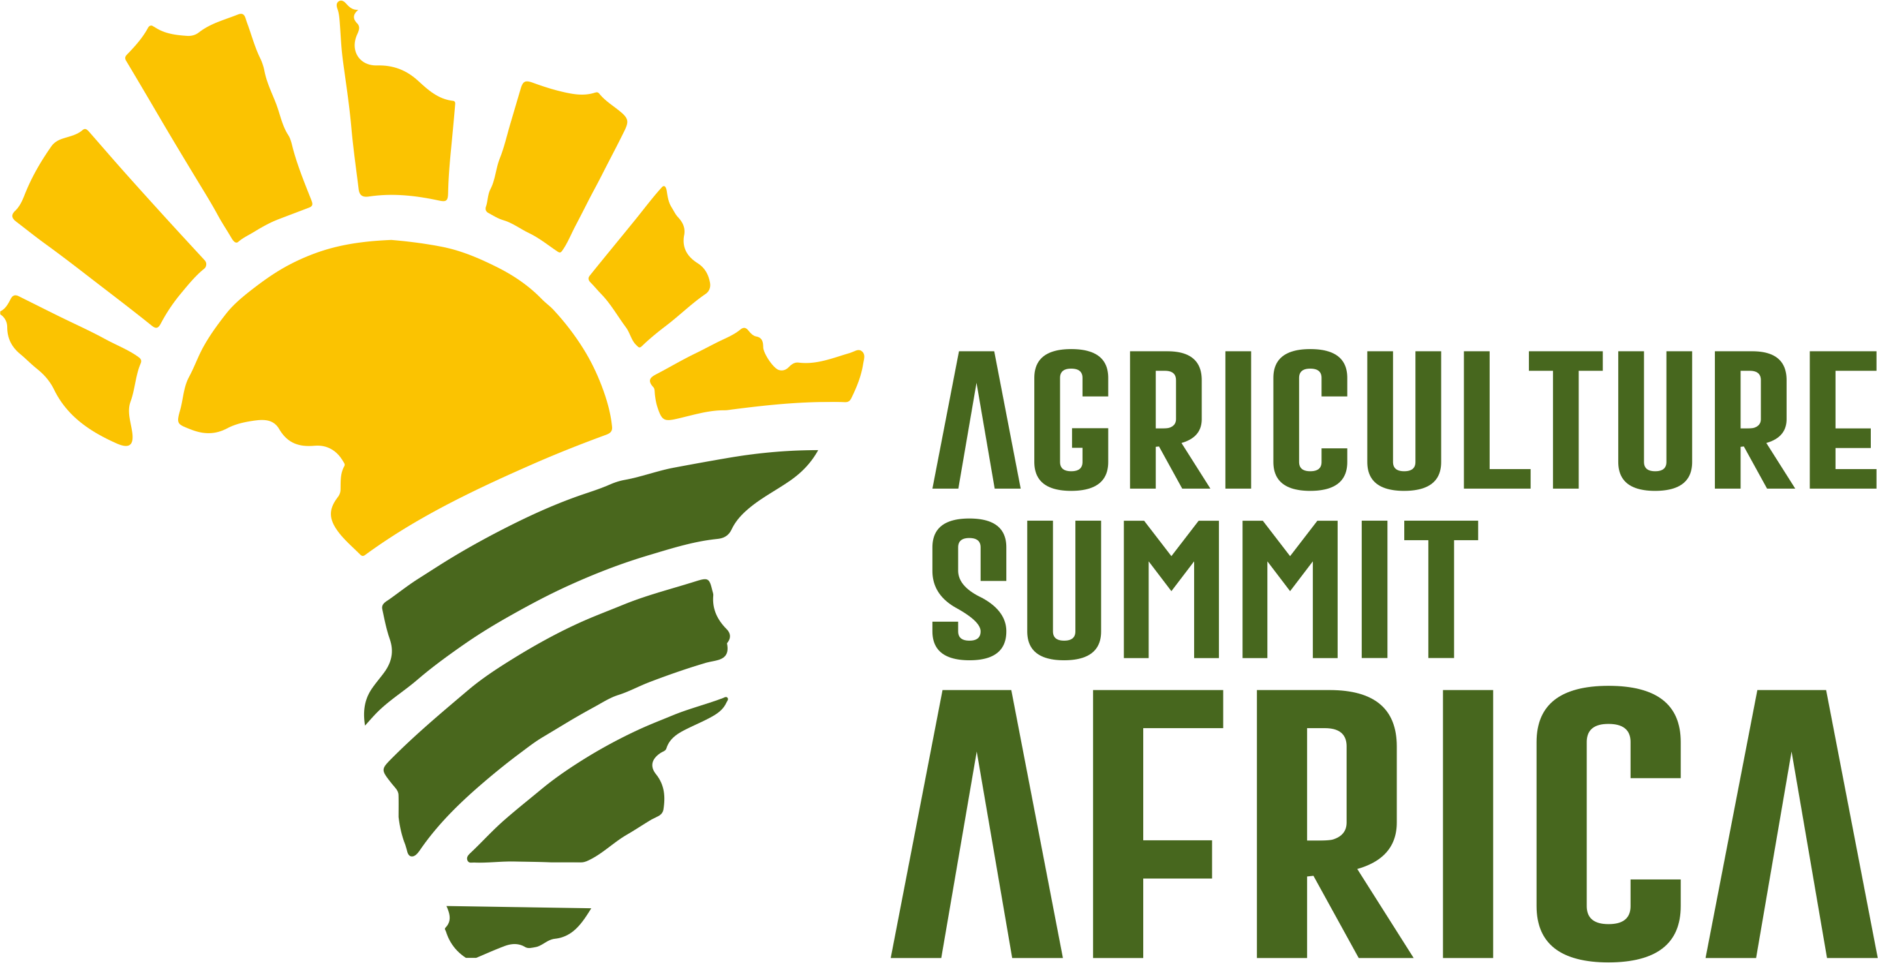 Agriculture Summit Africa